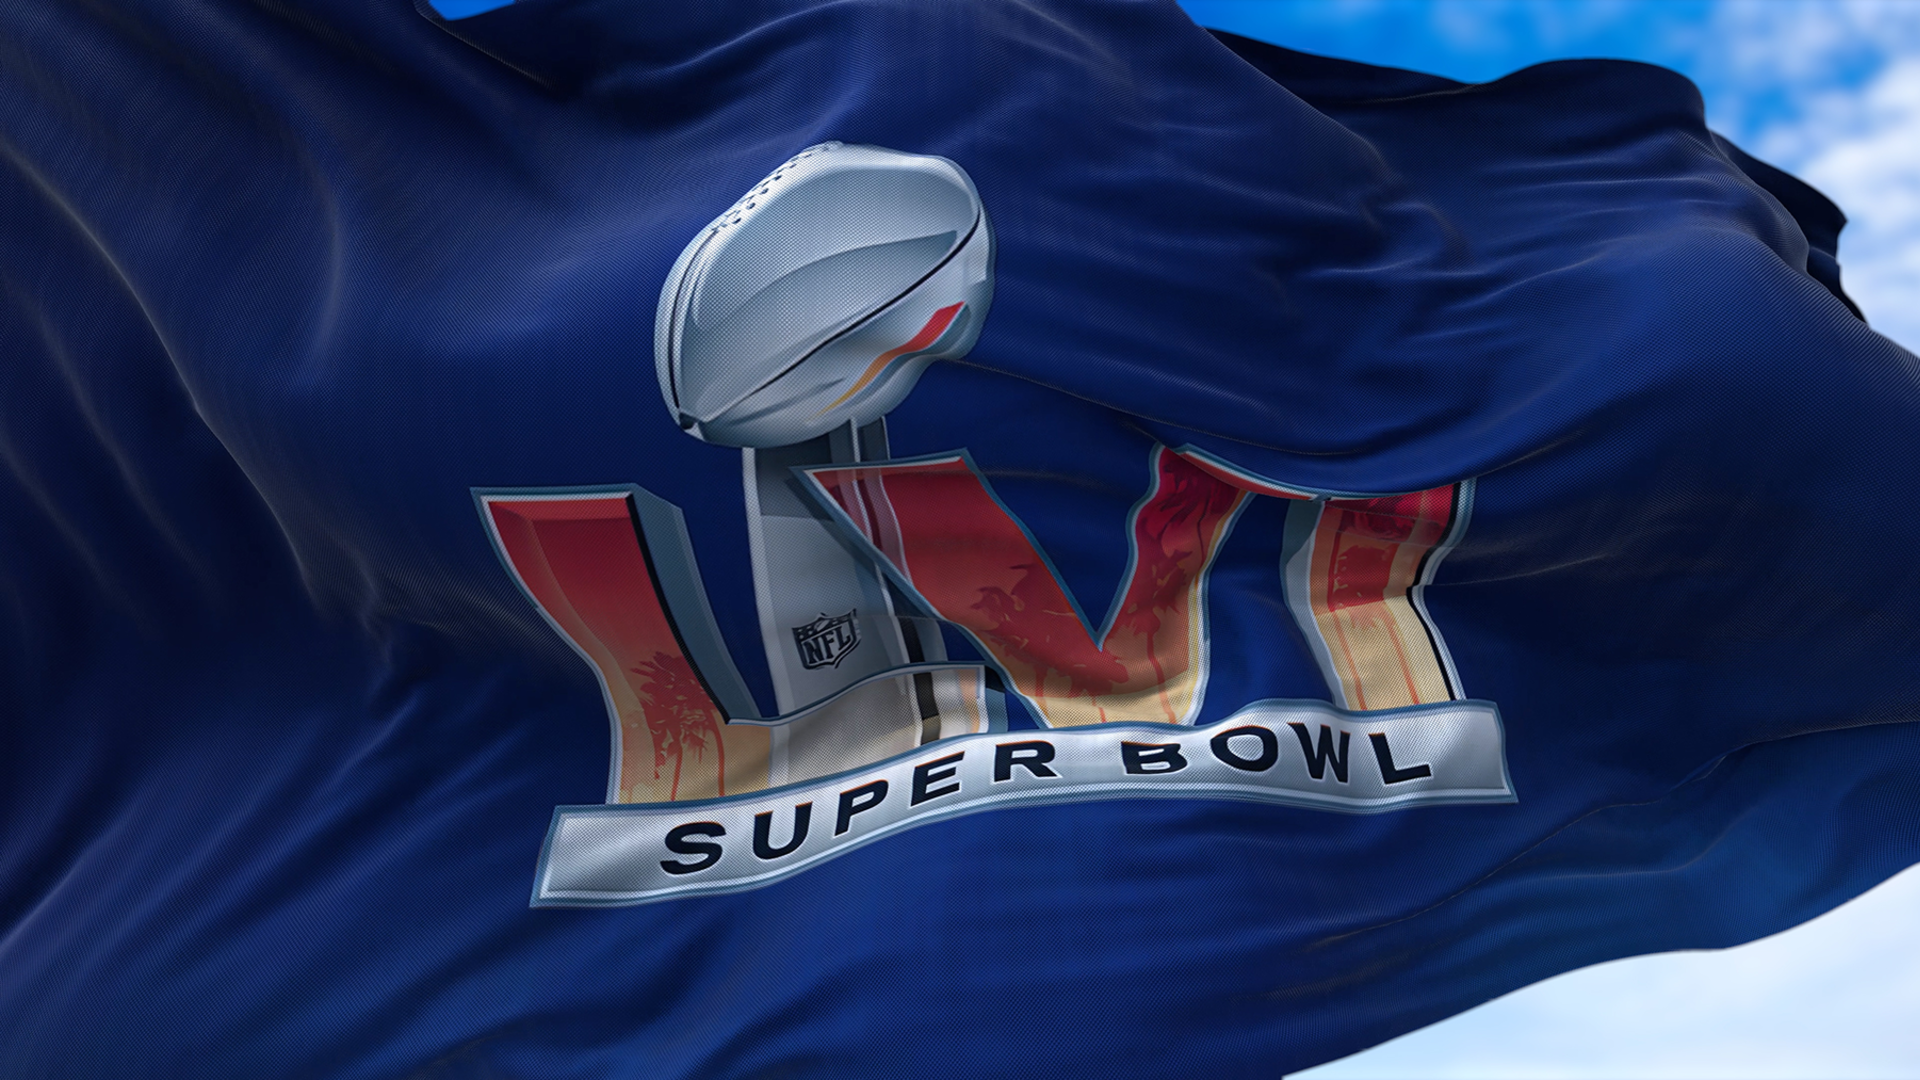 Super Bowl LVI Flag at SoFi Stadium